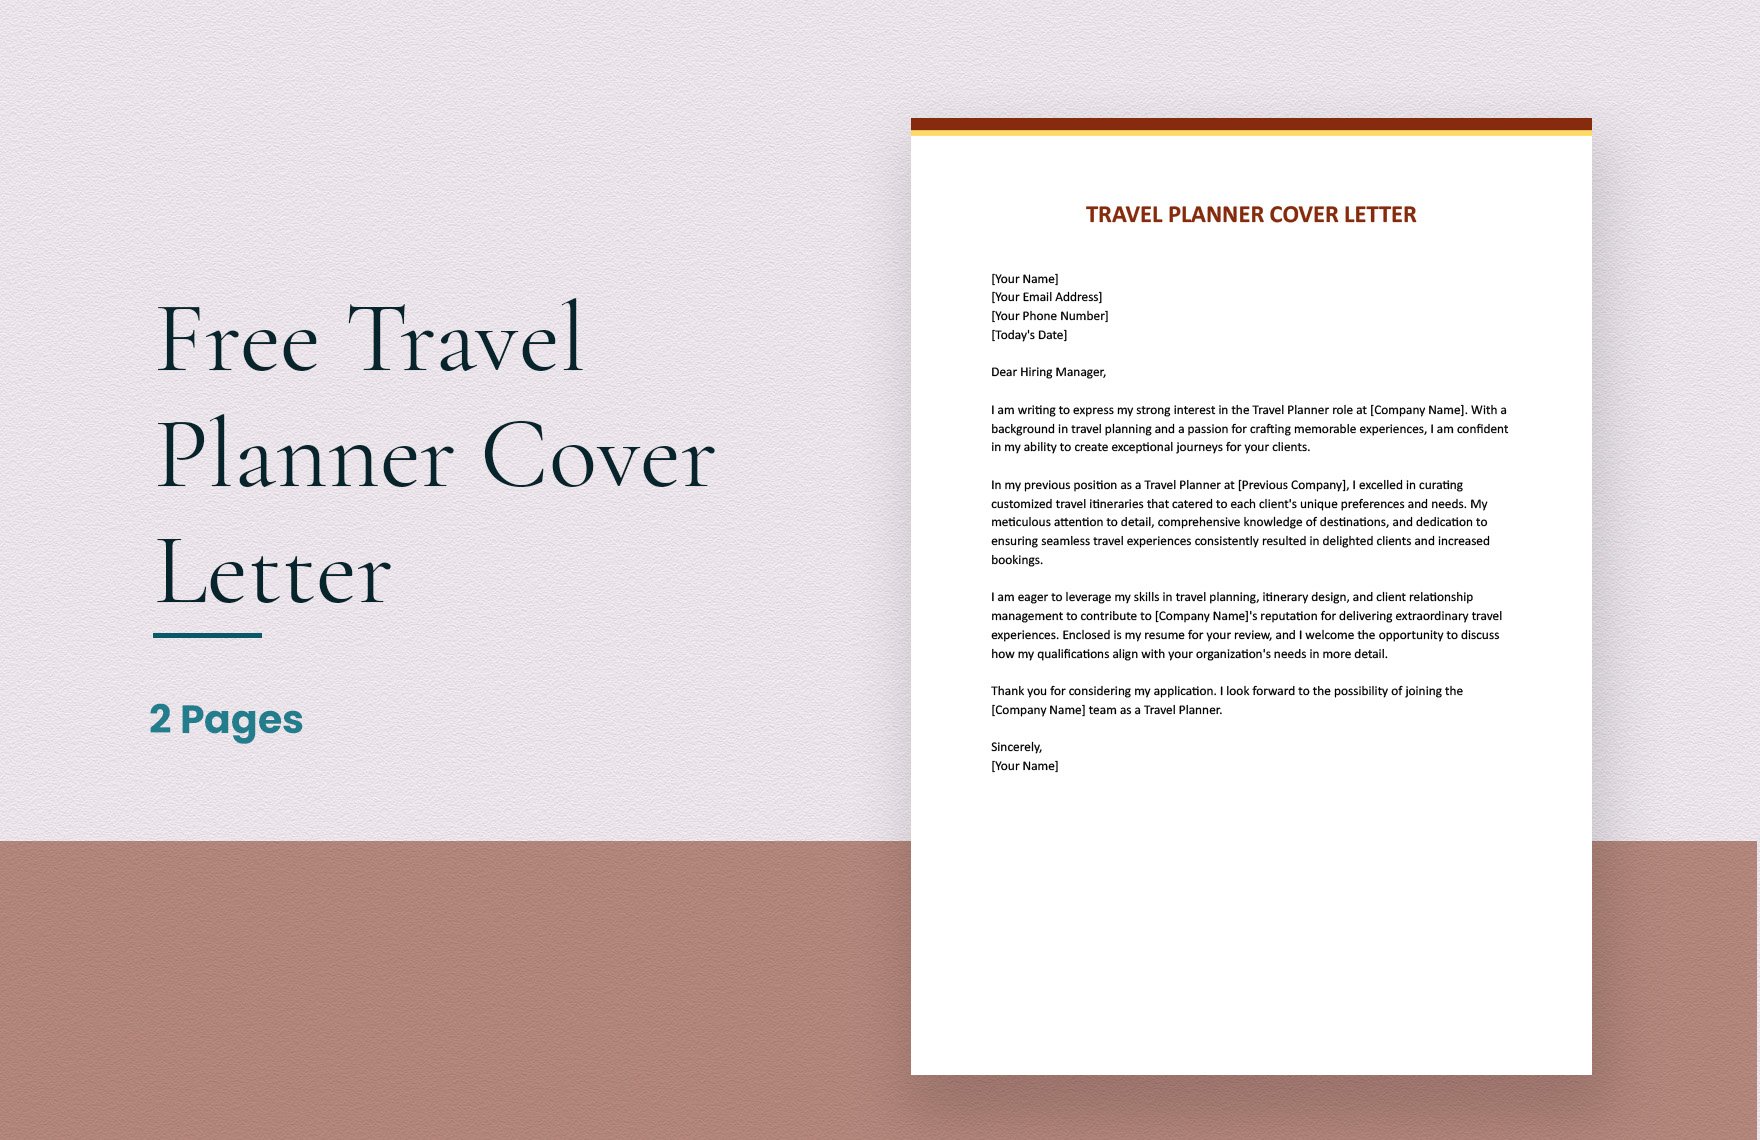 Travel Planner Cover Letter in Word, Google Docs